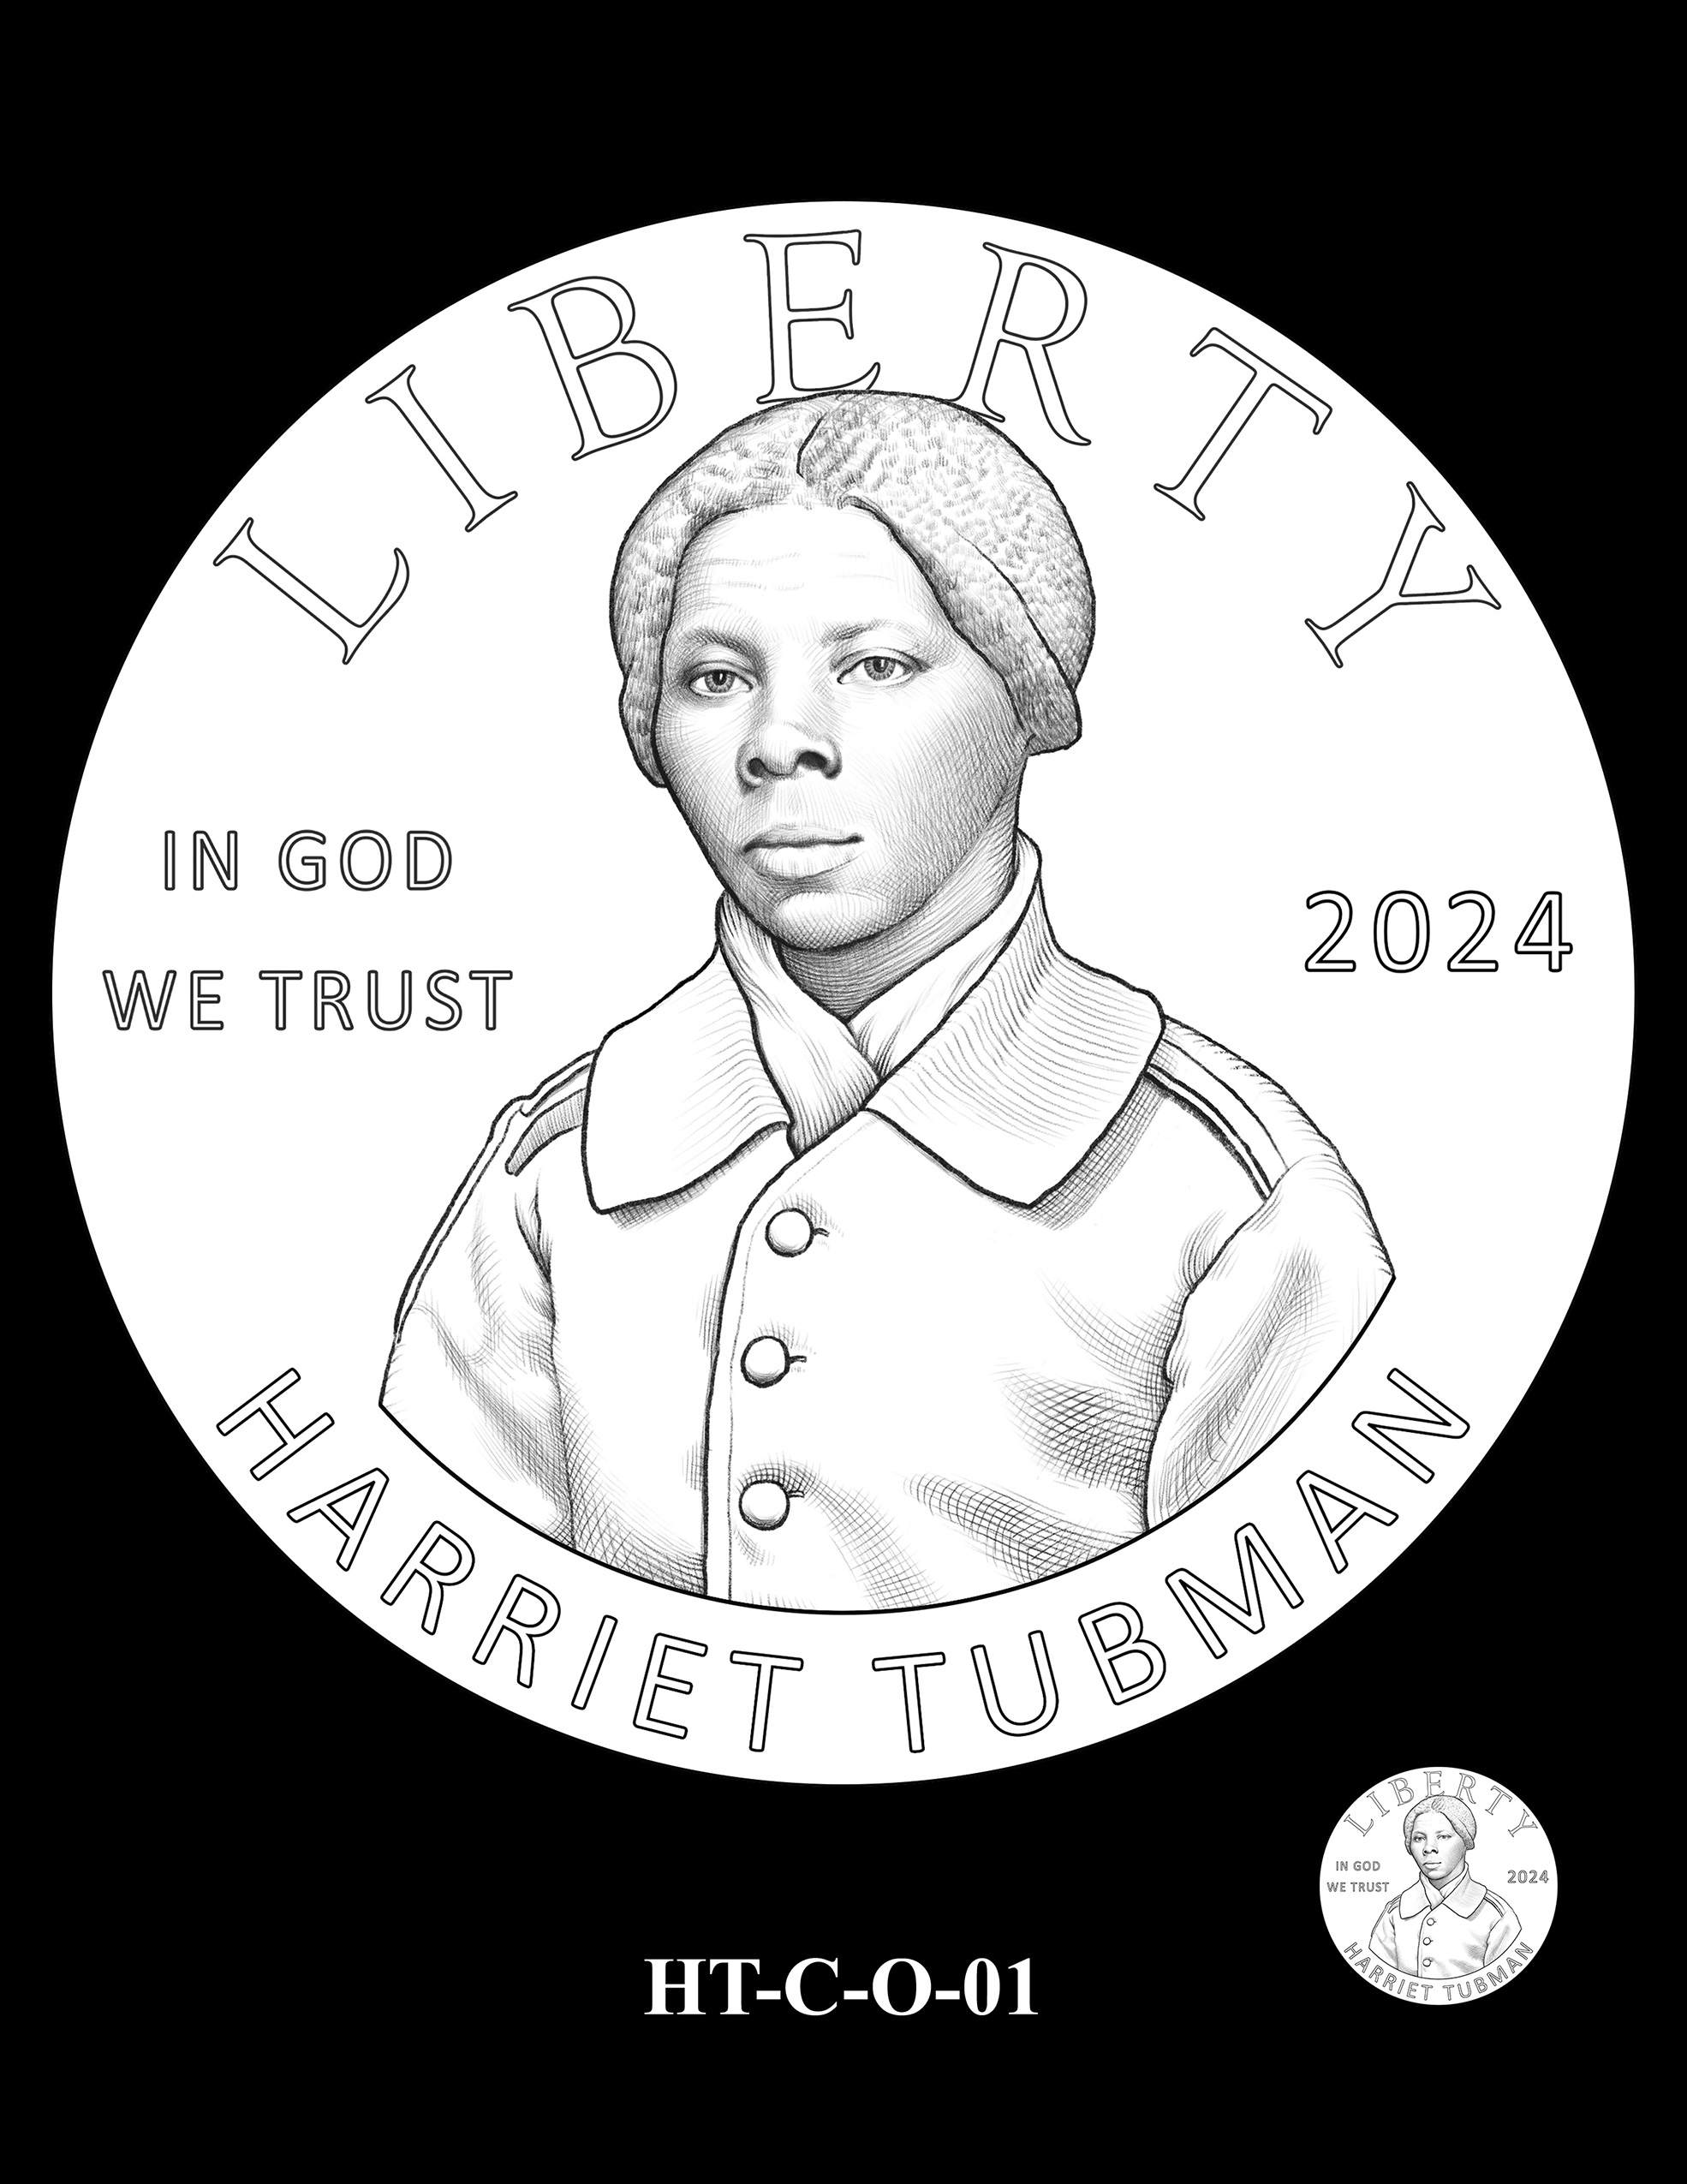 HT-C-O-01 -- Harriet Tubman